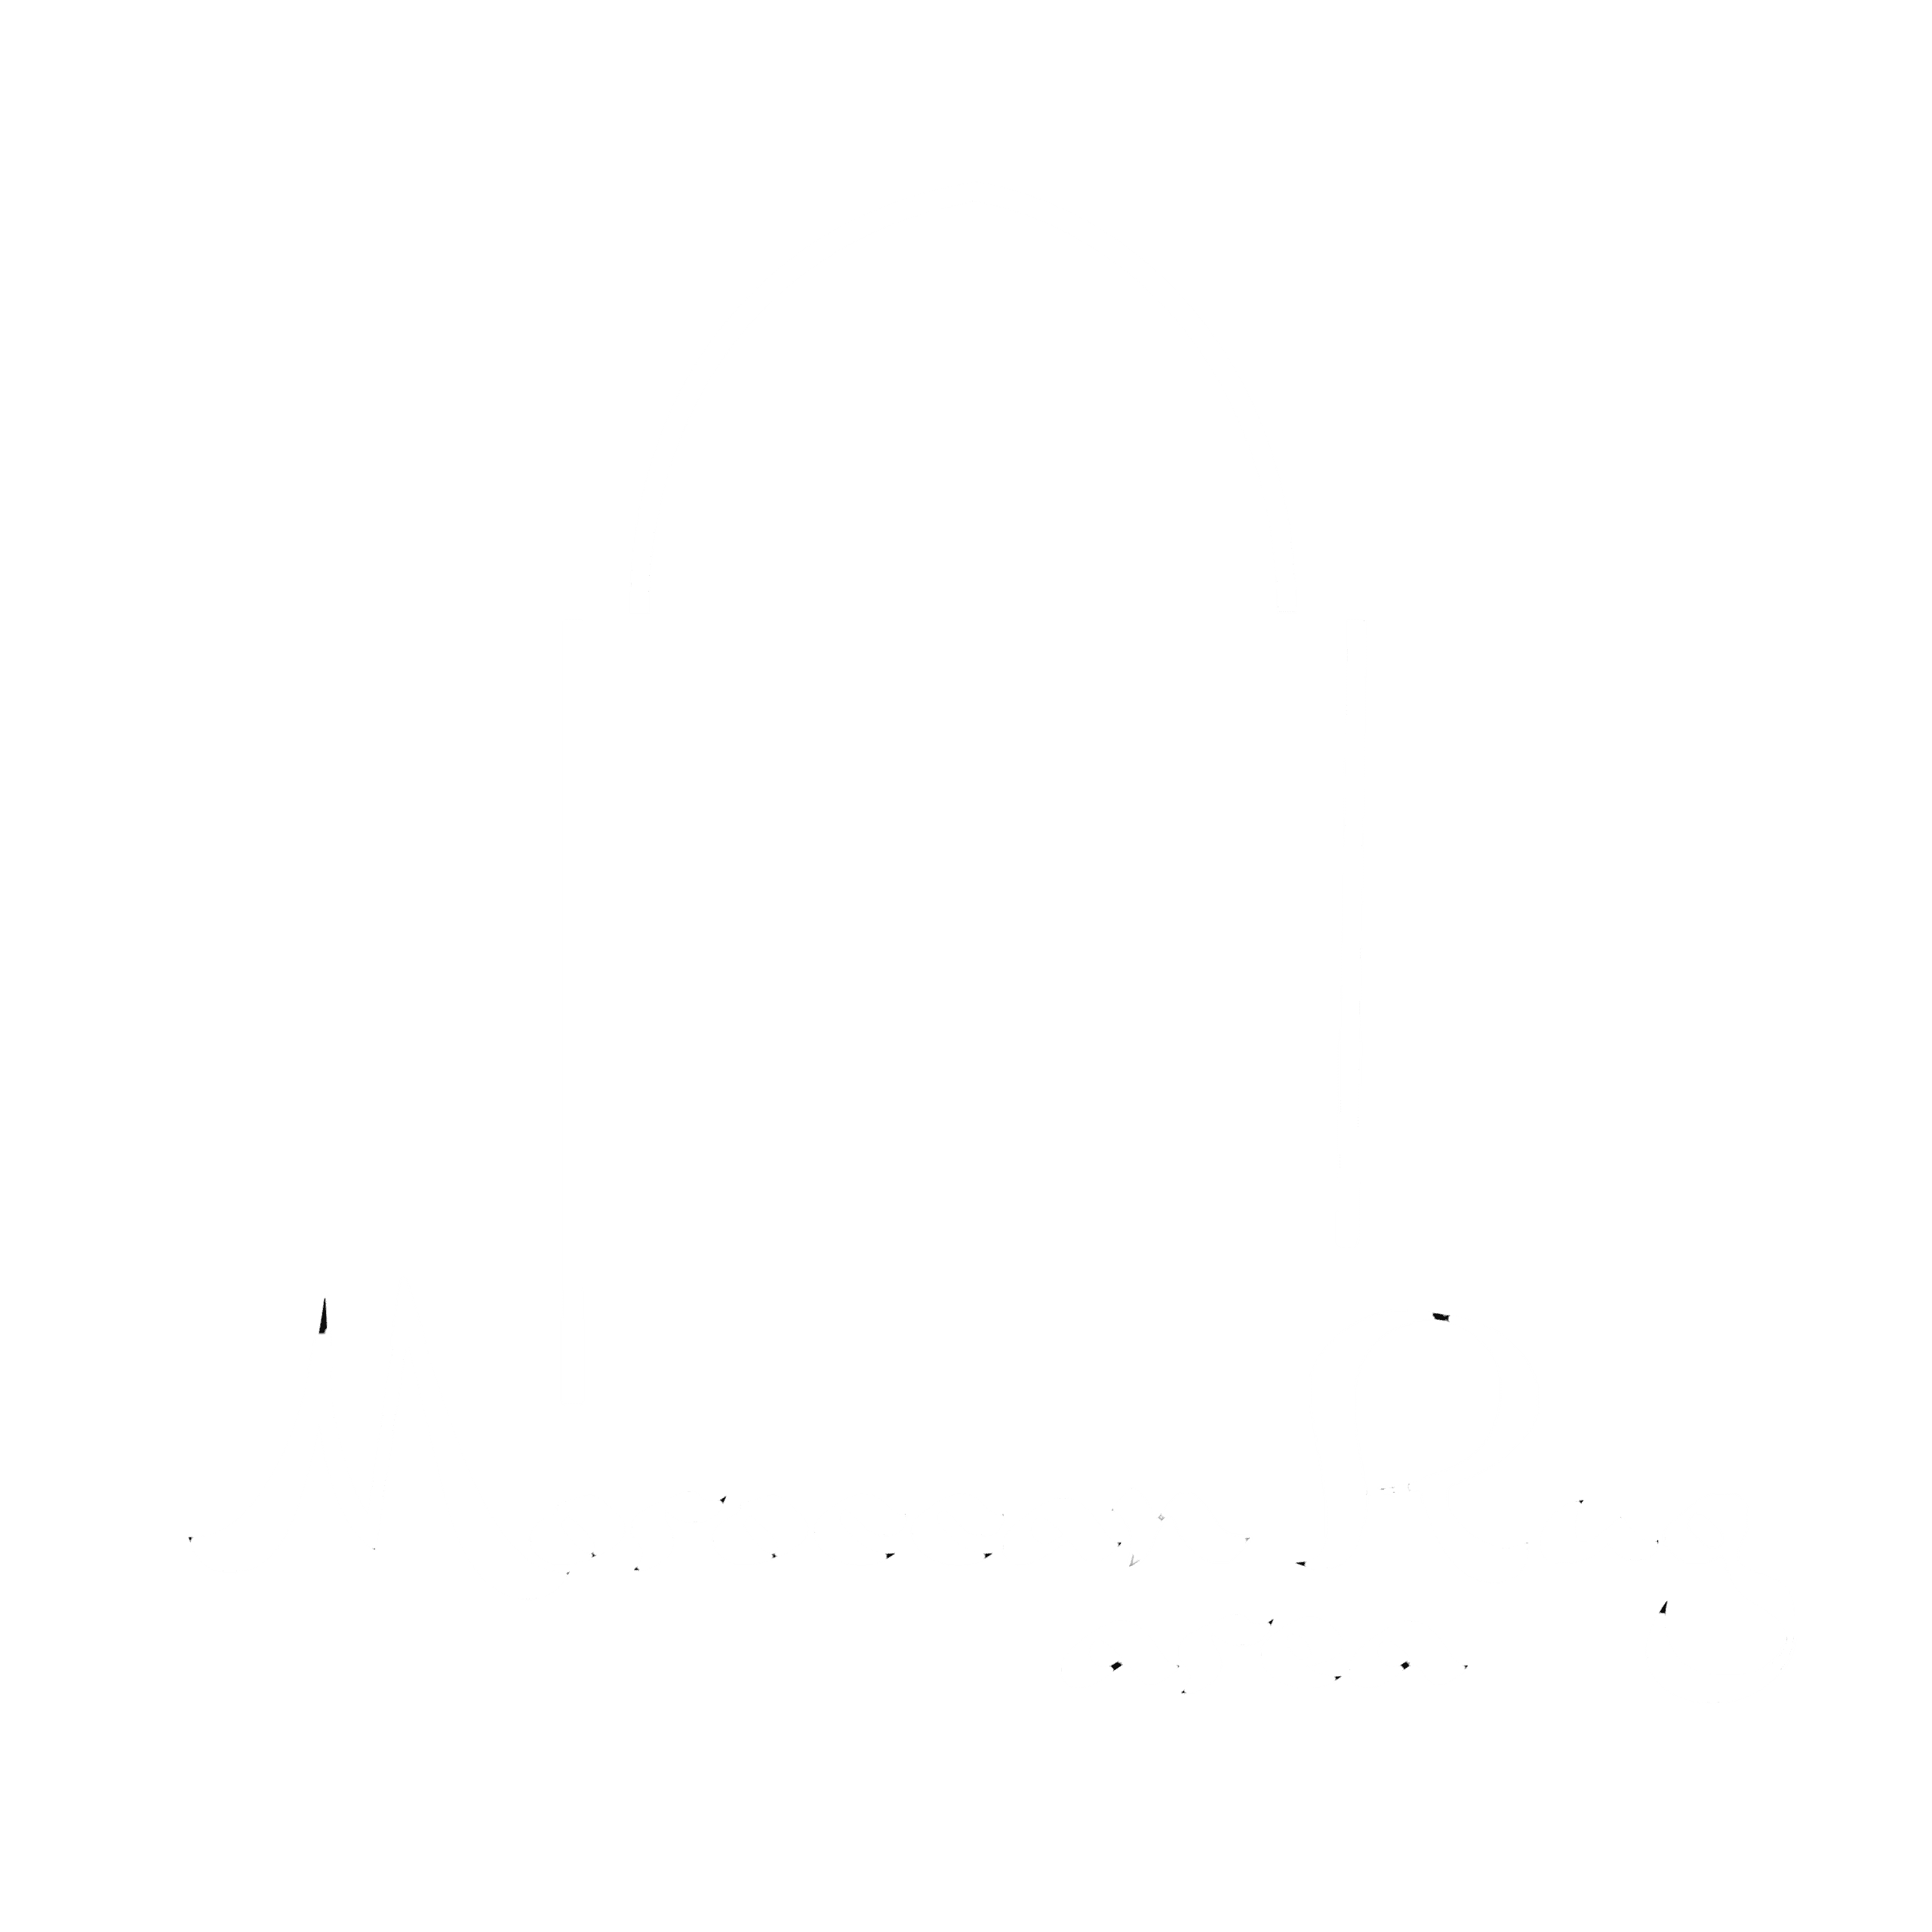 Moroccan Rug Area